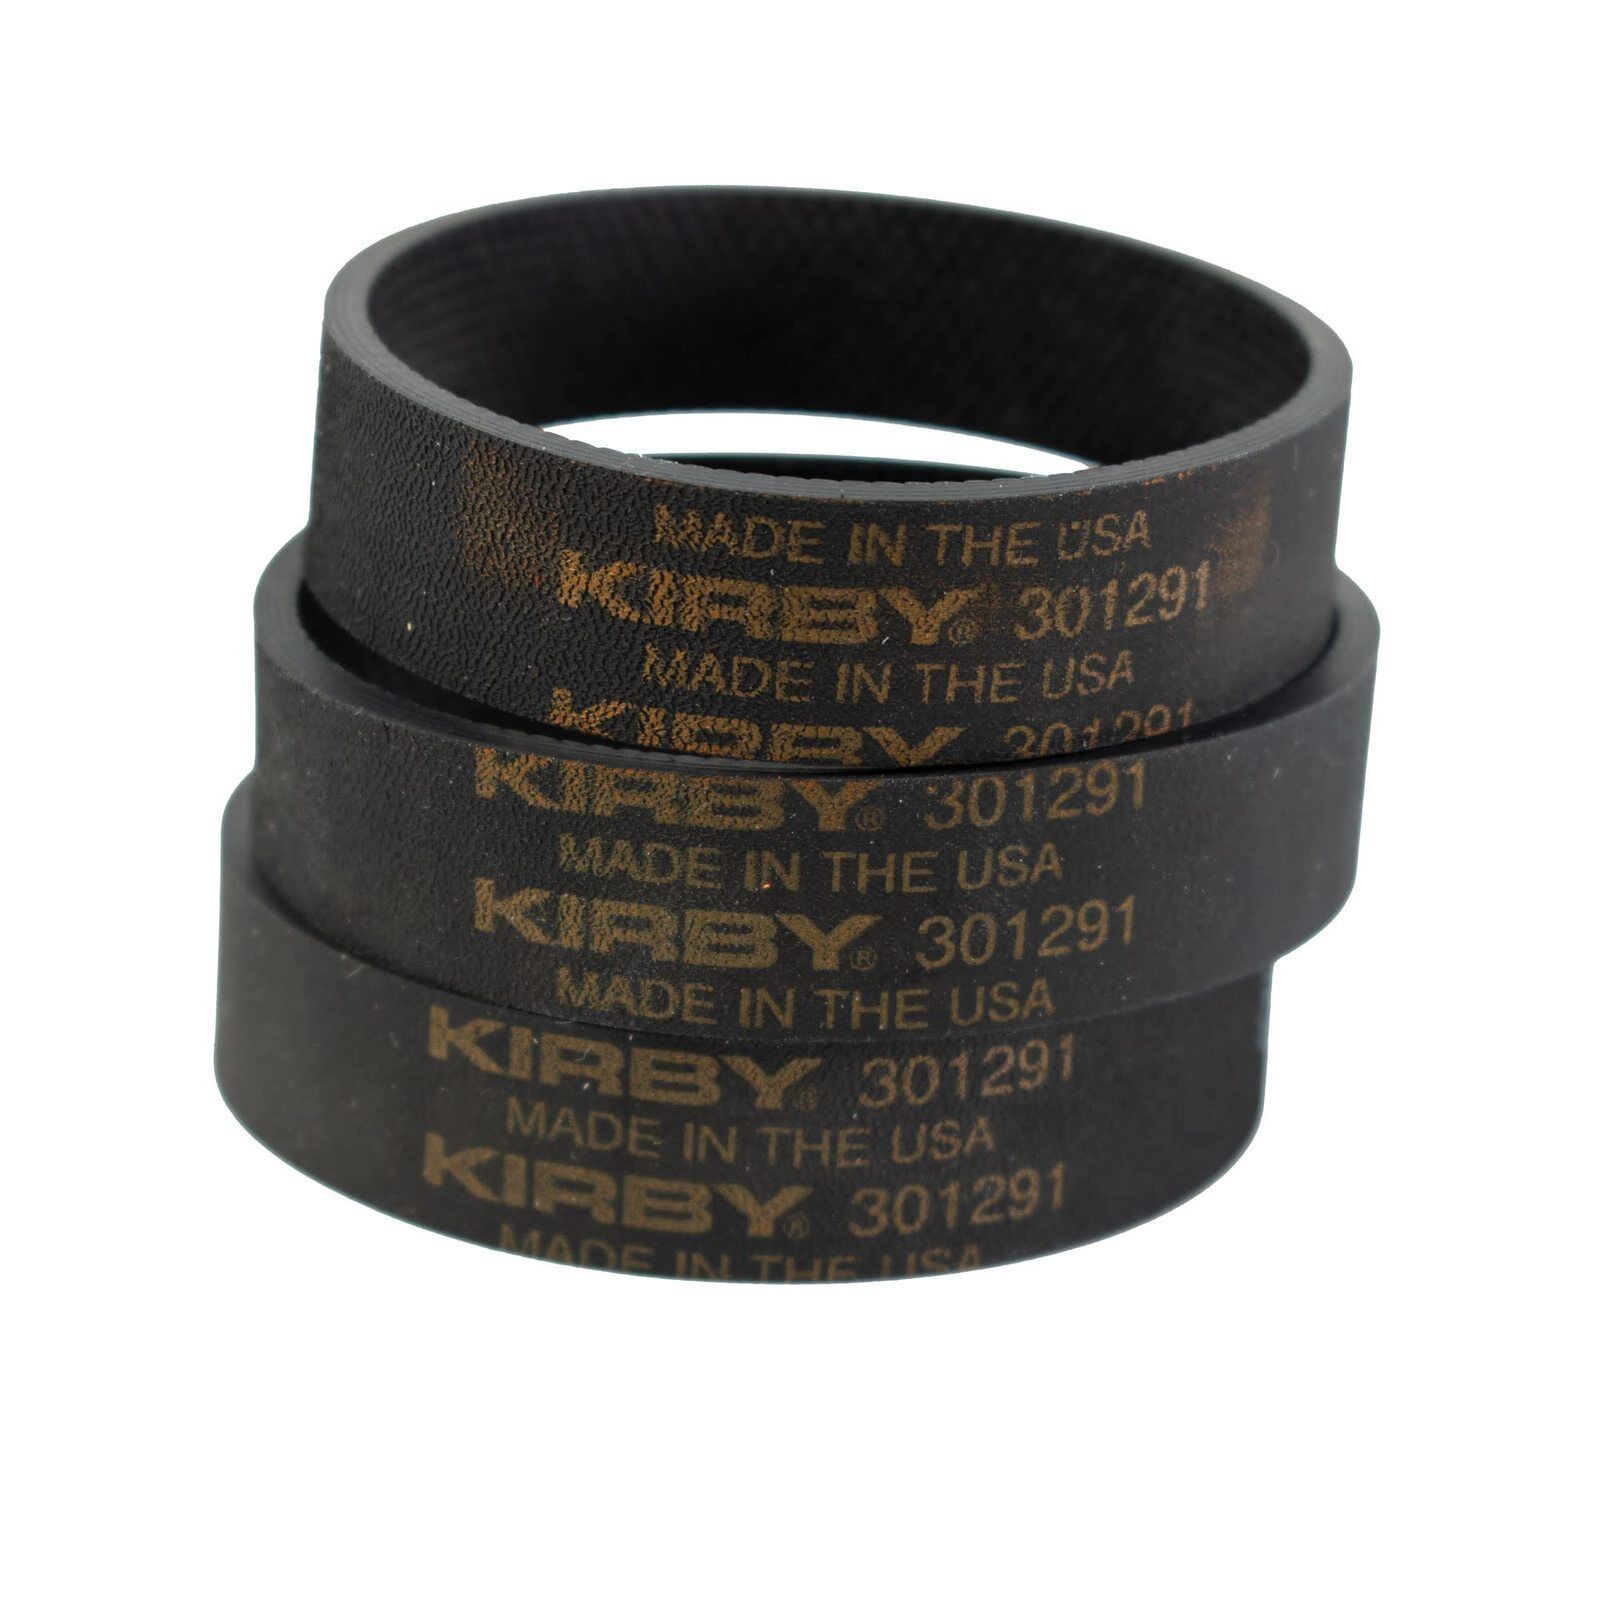 Kirby Vacuum Cleaner Belts (3 Belts, Black, 3) - $7.91 - $39.59